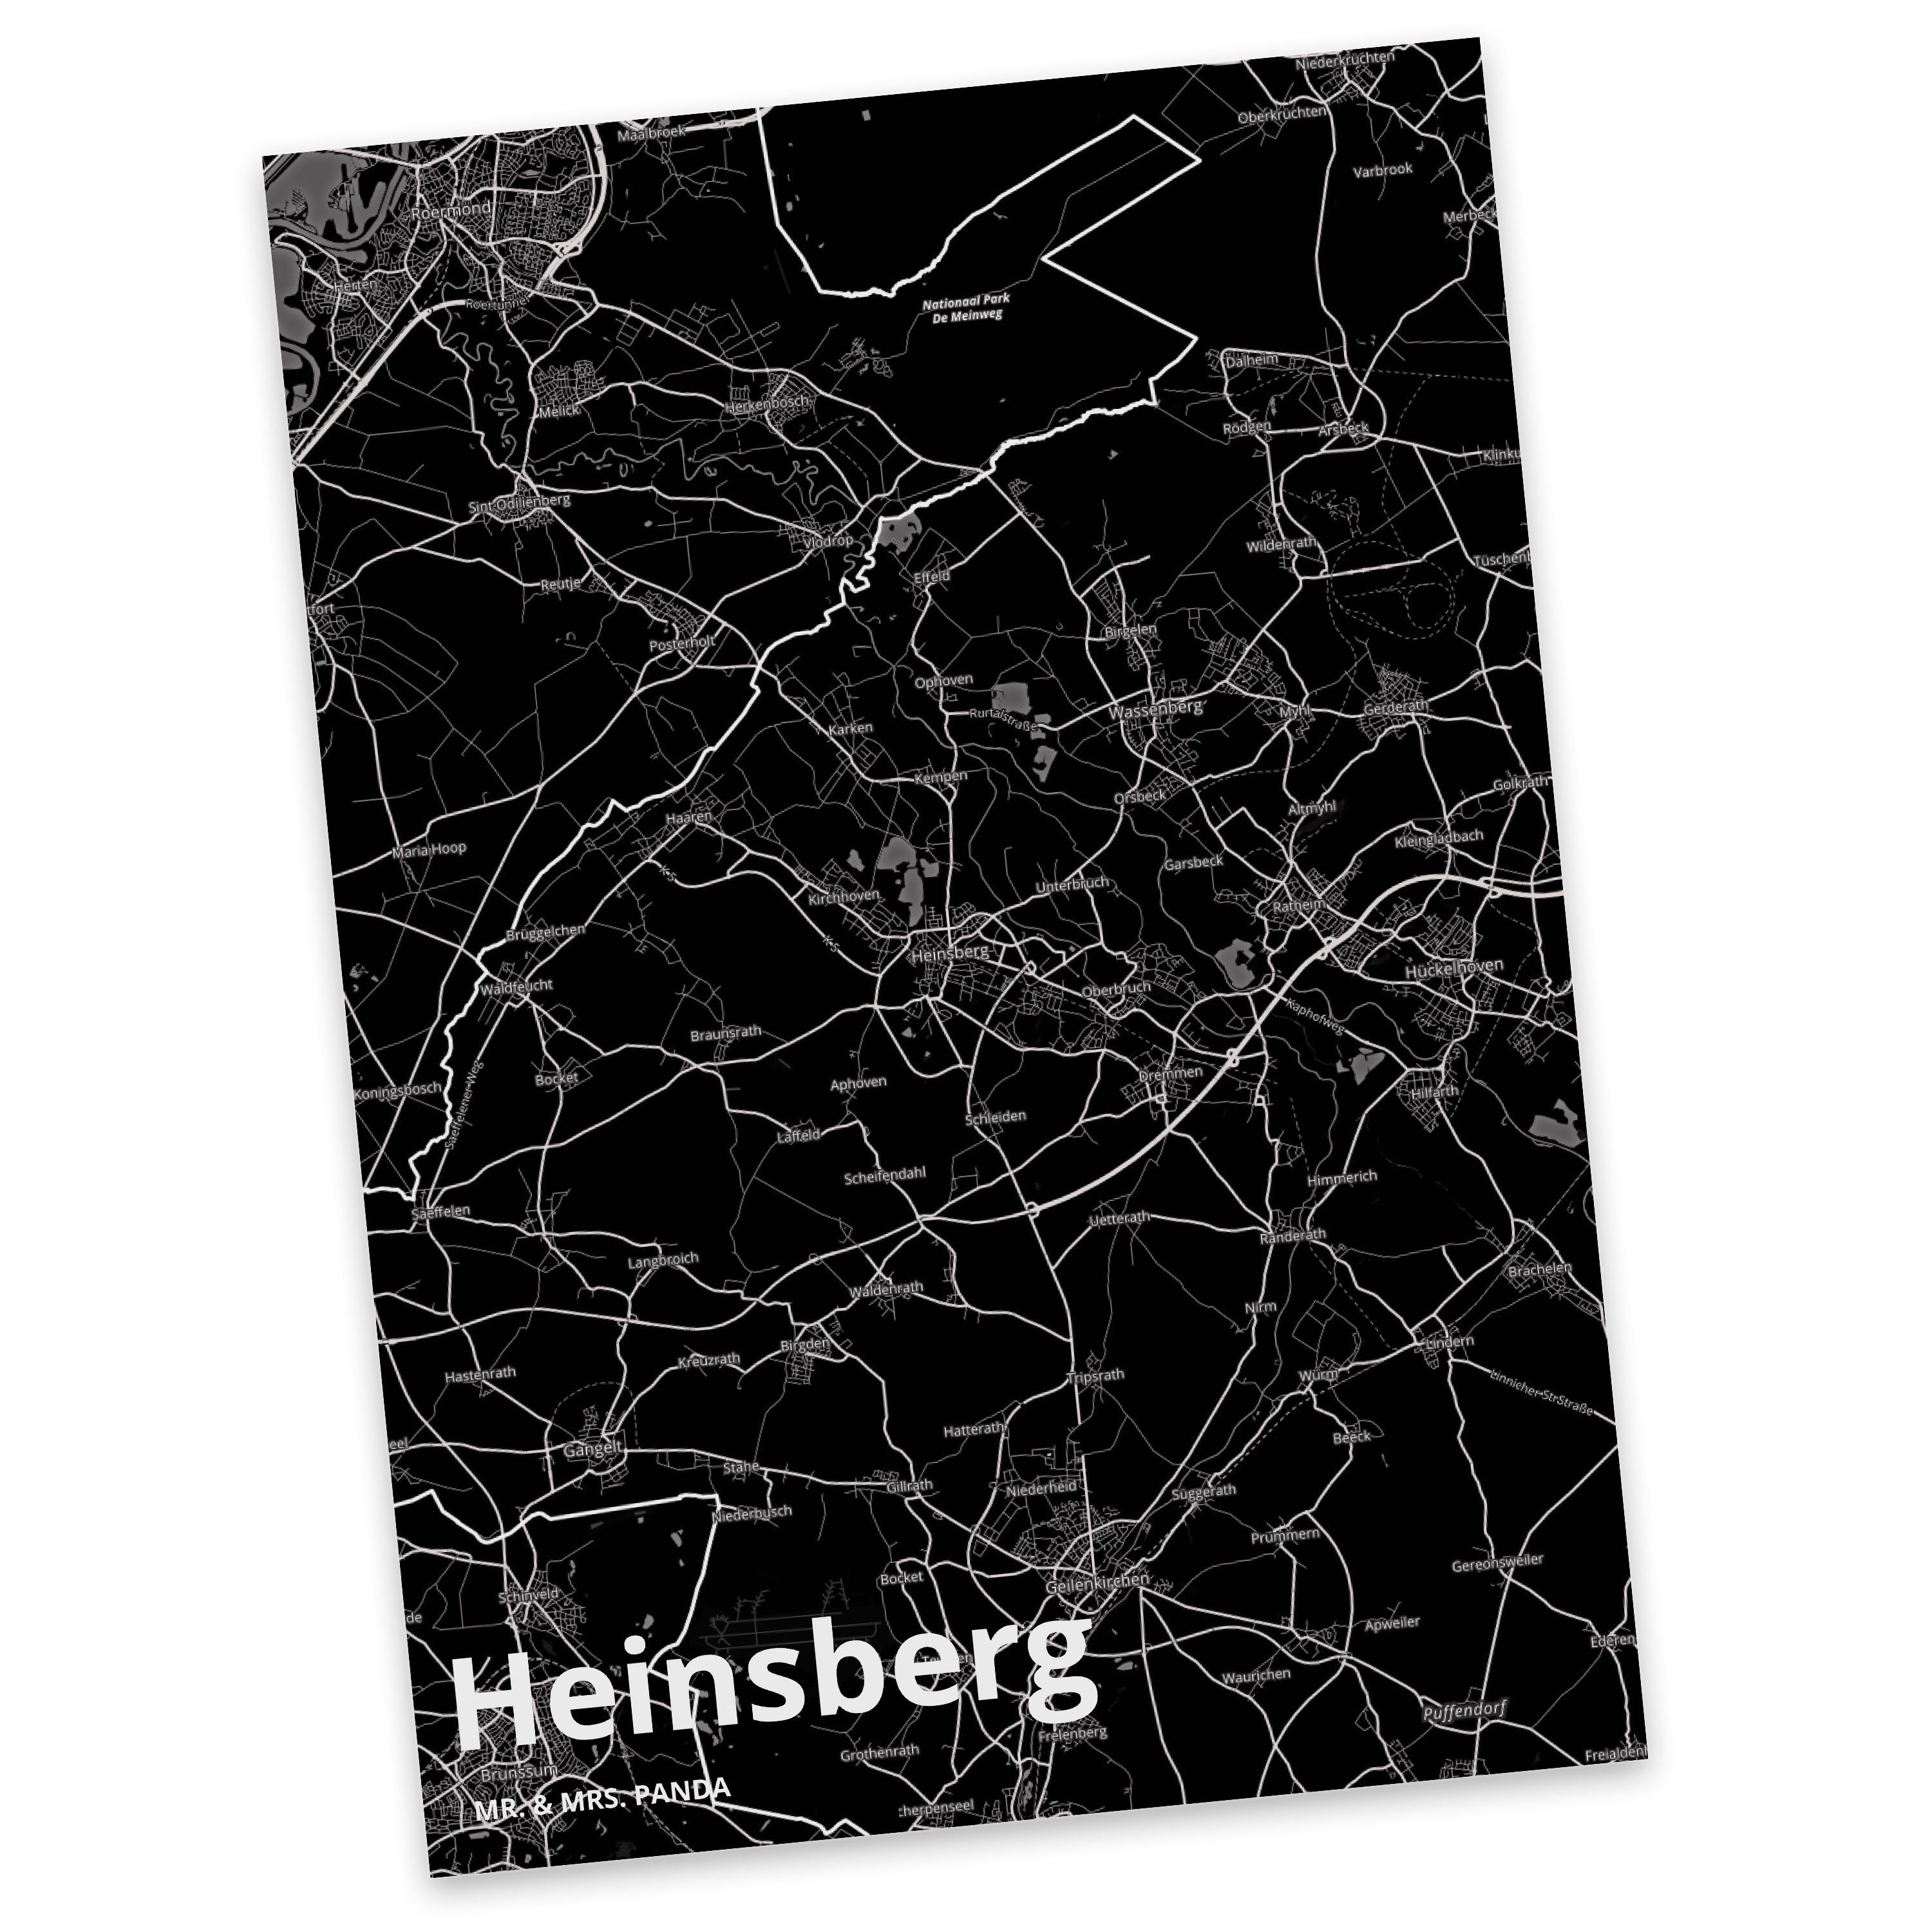 Mr. & Mrs. Panda Postkarte Heinsberg - Geschenk, Ansichtskarte, Dankeskarte, Dorf, Geschenkkarte